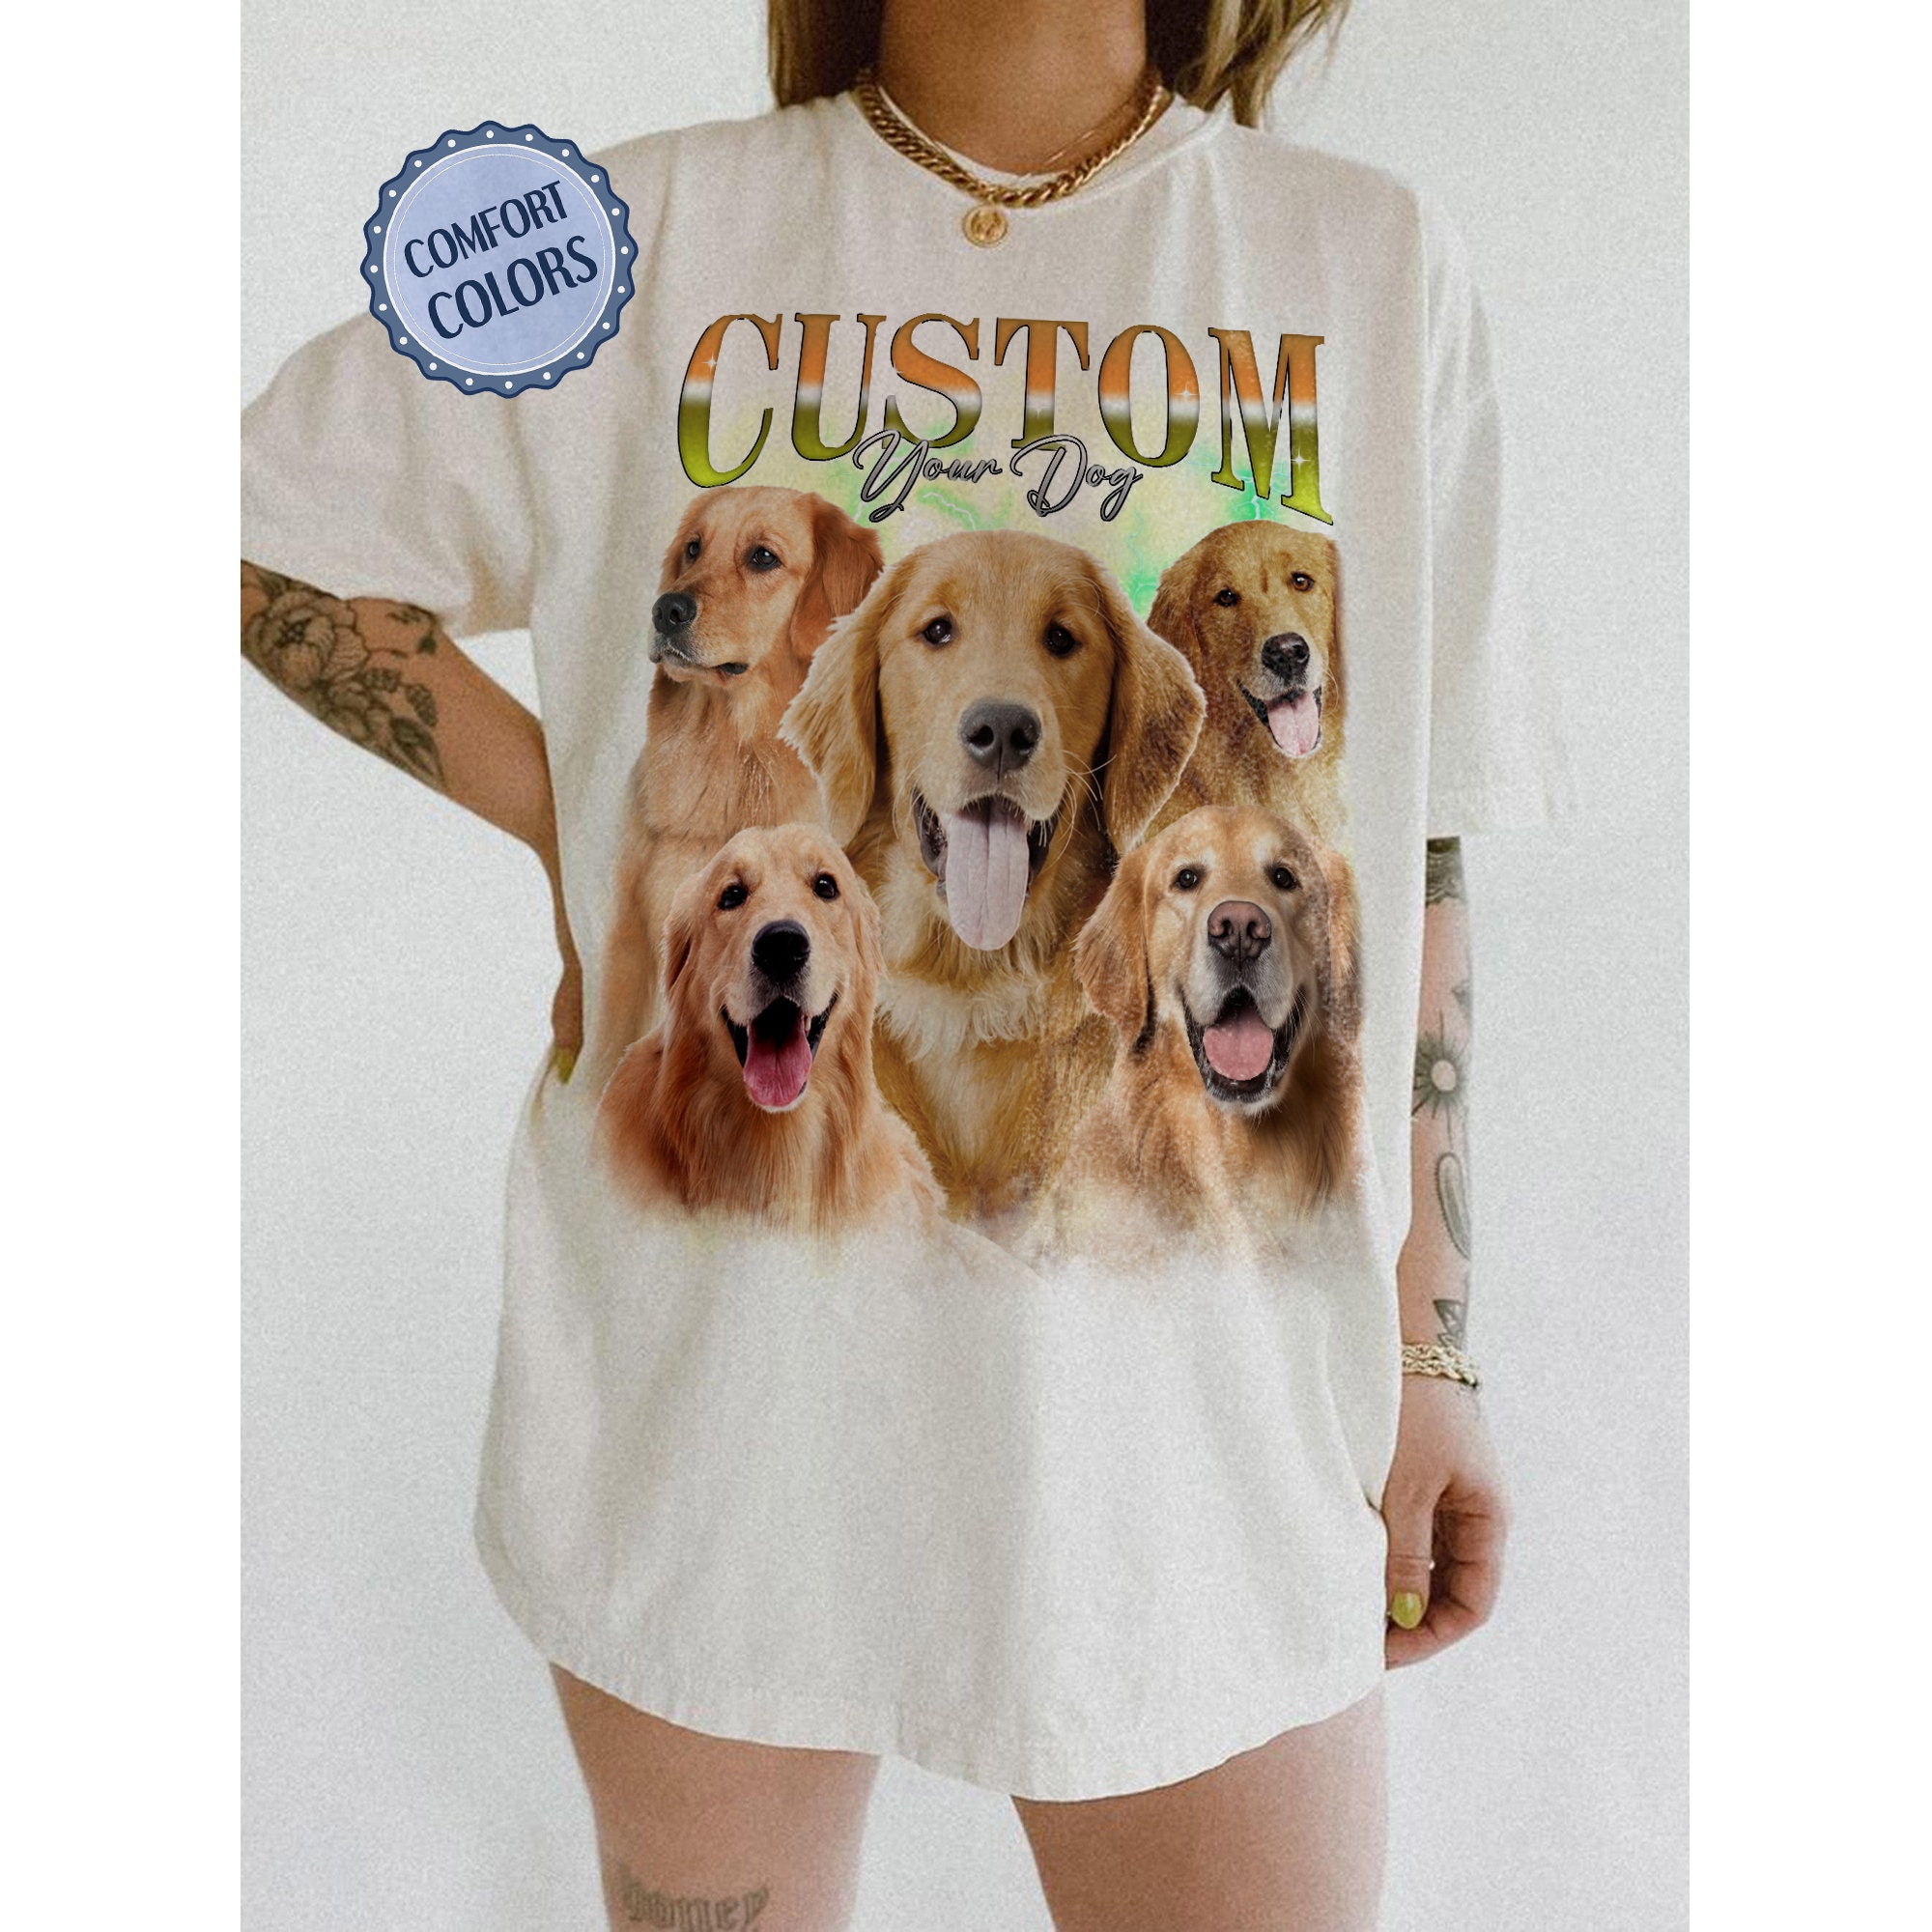 Discover Pet Custom Vintage Washed Shirt, Custom Dog T-Shirt, Dog Bootleg Retro 90's Tee, Custom Pet Photo, Customized Shirt With Dog, Pet Lovers